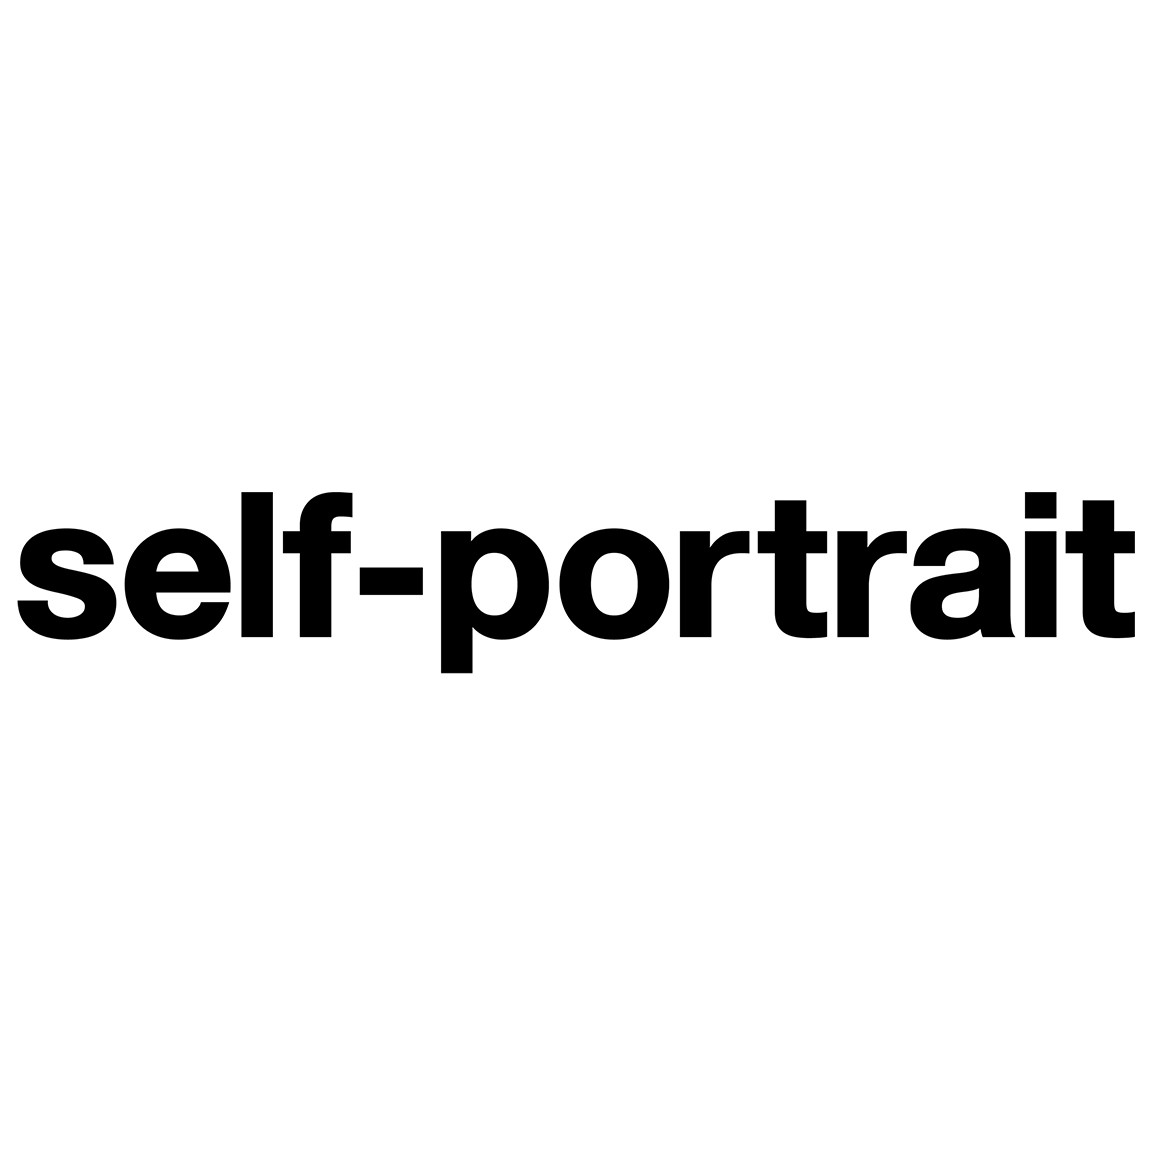 self portrait